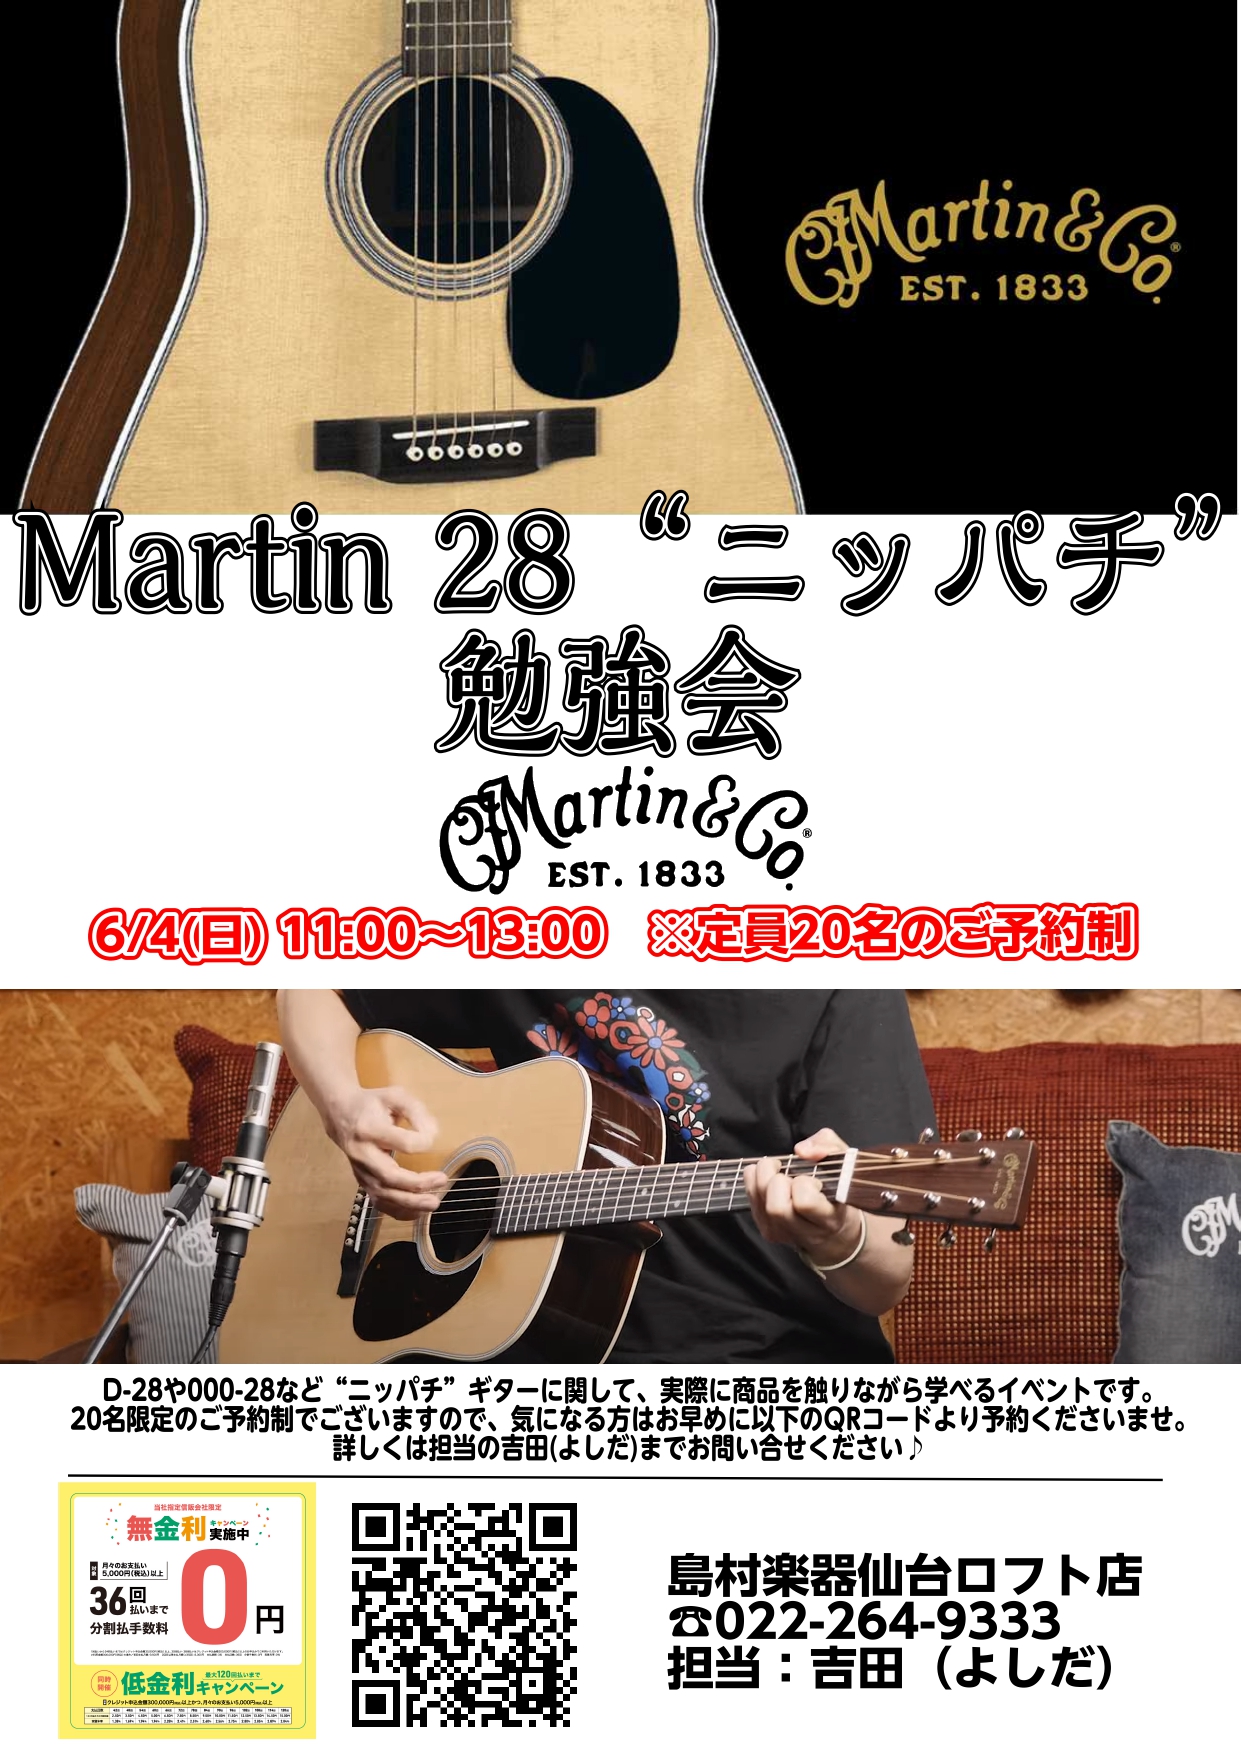 Martin 28“ニッパチ”勉強会を開催いたします！ 6/2(金)～6/11(日)のMartinフェア開催に際し、6/4(日)に「Martin 28“ニッパチ”勉強会」を開催いたします！ 世界一有名なアコースティックギターと言っても過言ではないMartin「D-28 Standard」。今回はD- […]